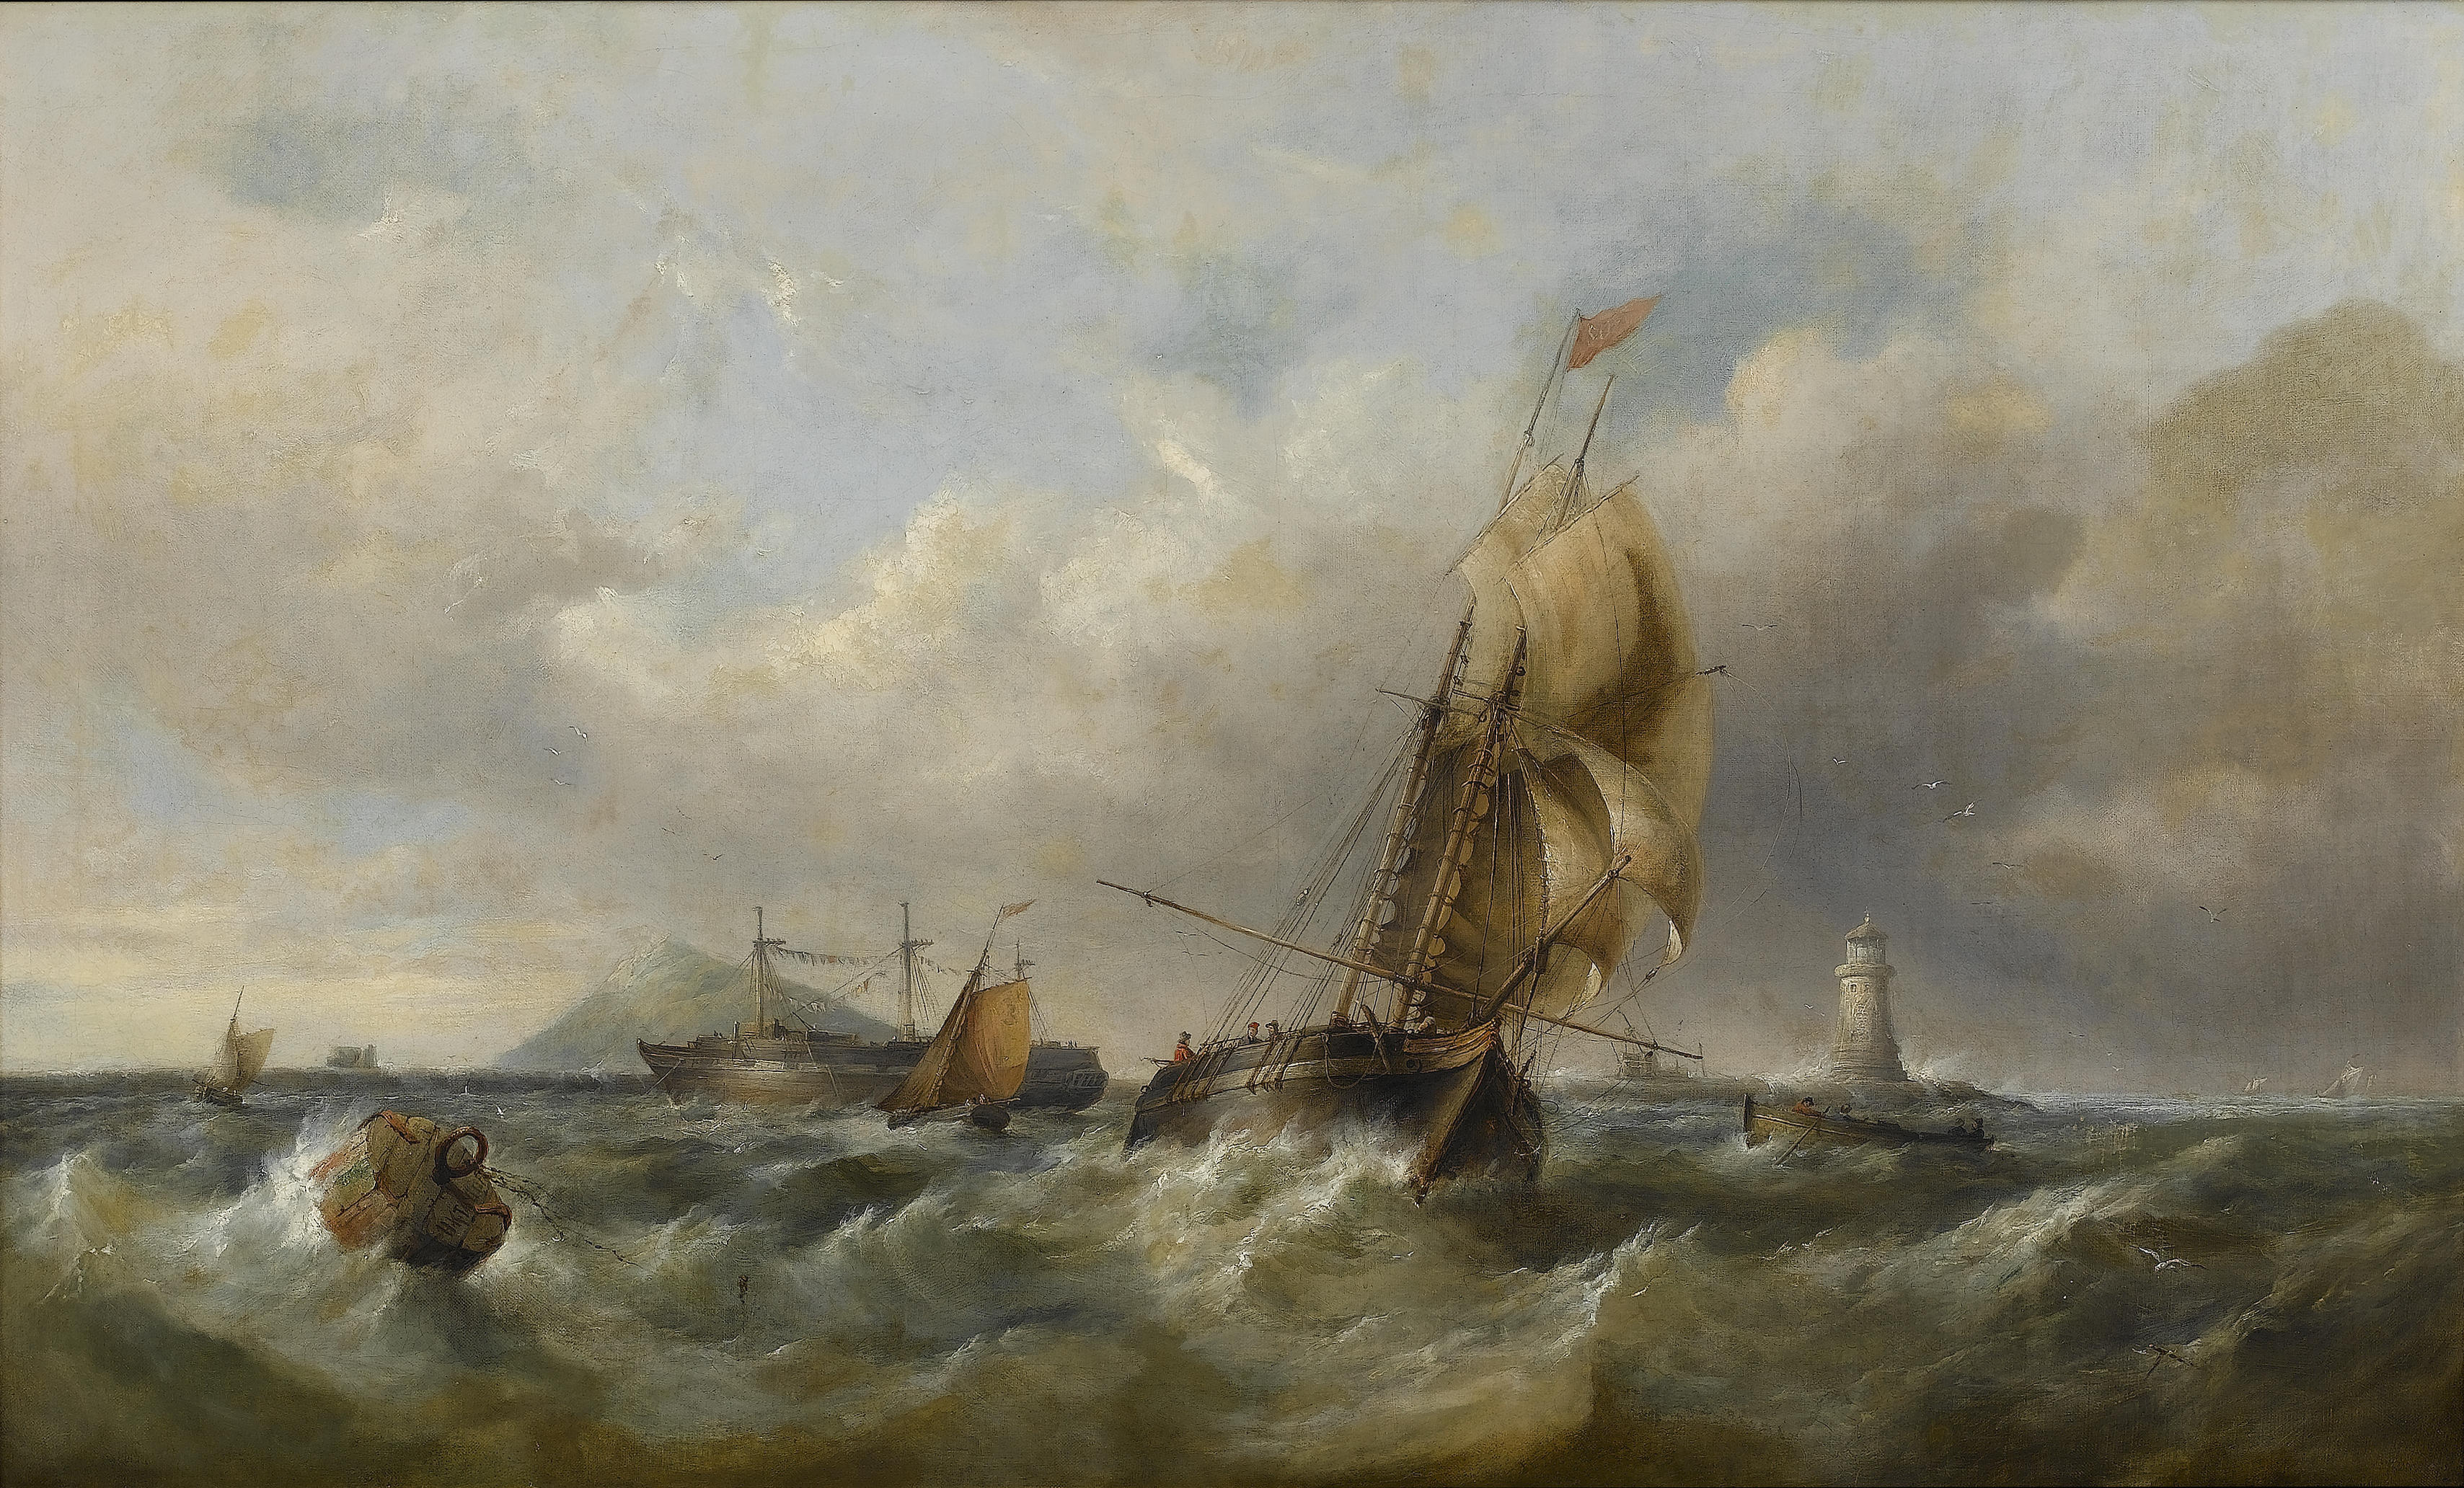 Henry King Taylor - A trading schooner in choppy seas off a moored hulk